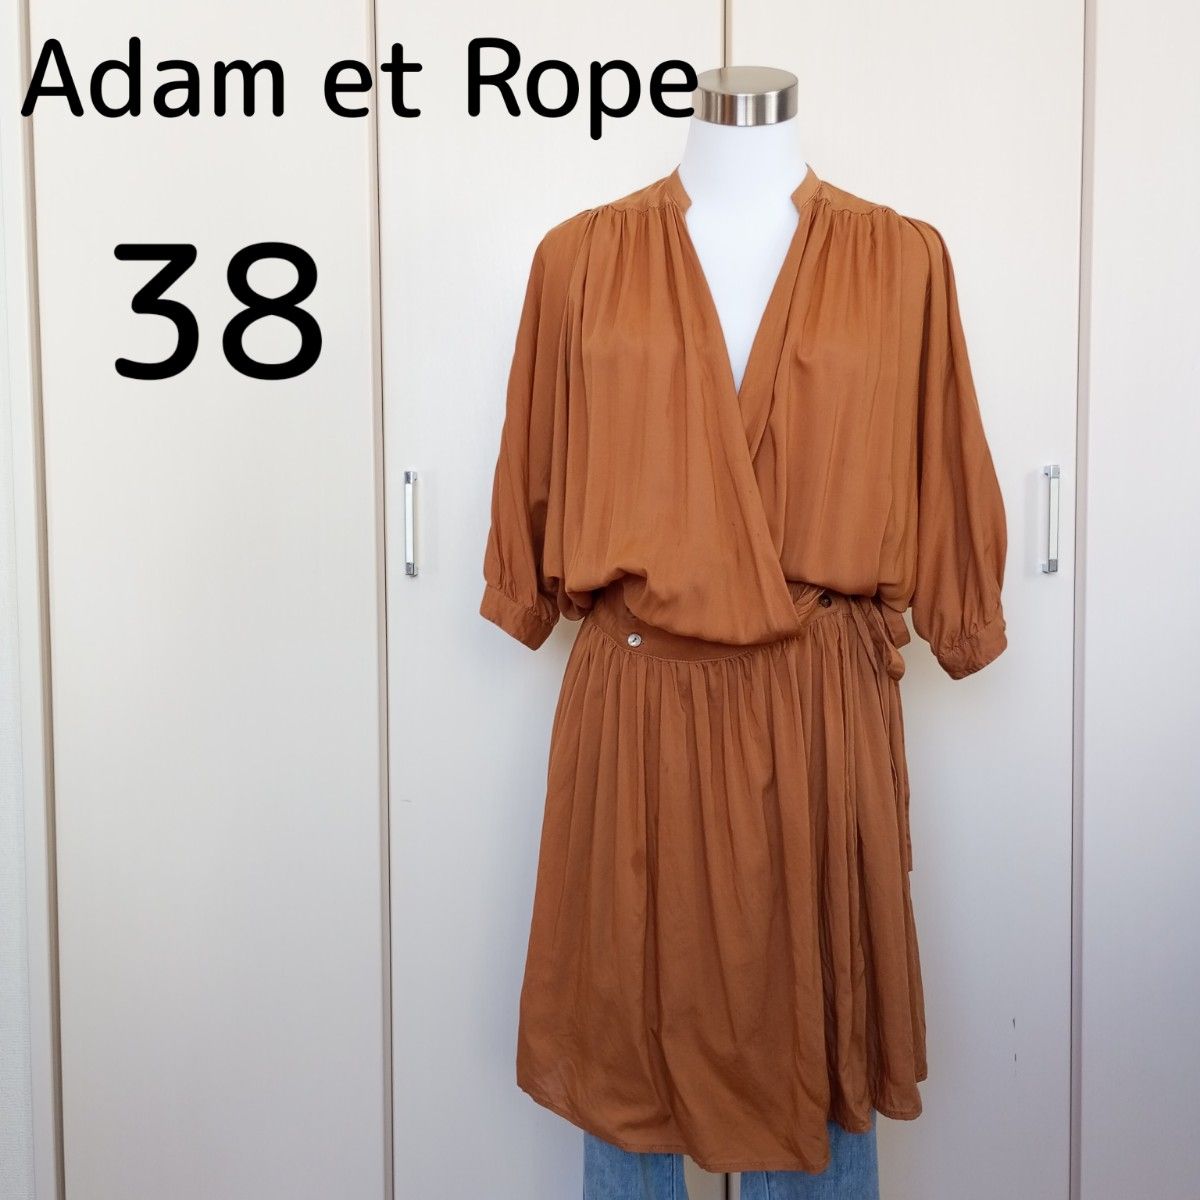 Adam et Rope アダムエロペ チュニック 夏服 Vネック ブラウン 38 Mサイズ レディース